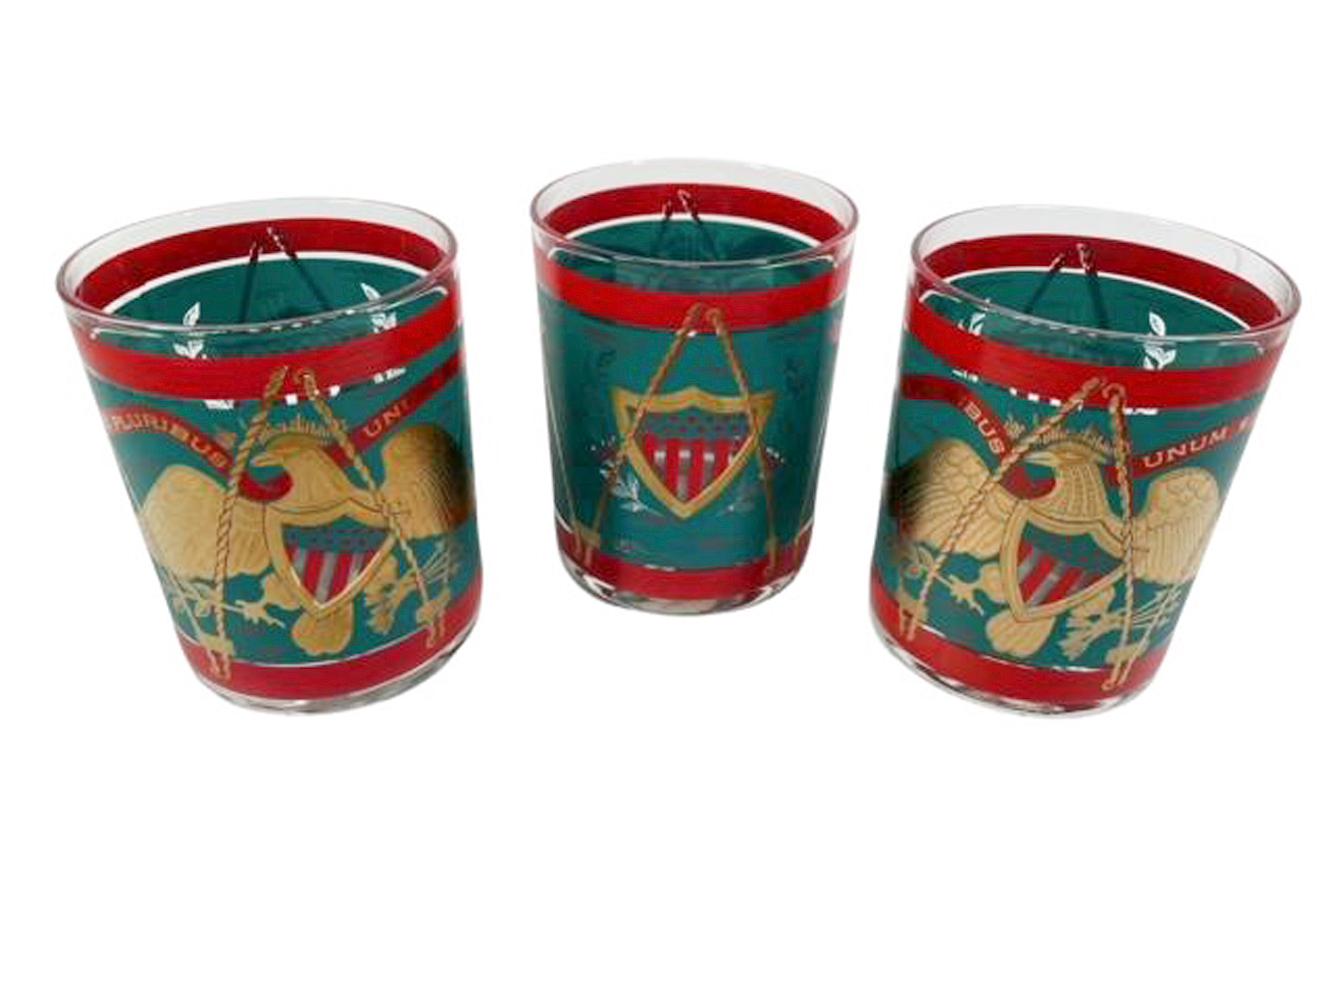 Four Vintage Cera Parade Drum Rocks Glasses with Eagle and Shield Design For Sale 4